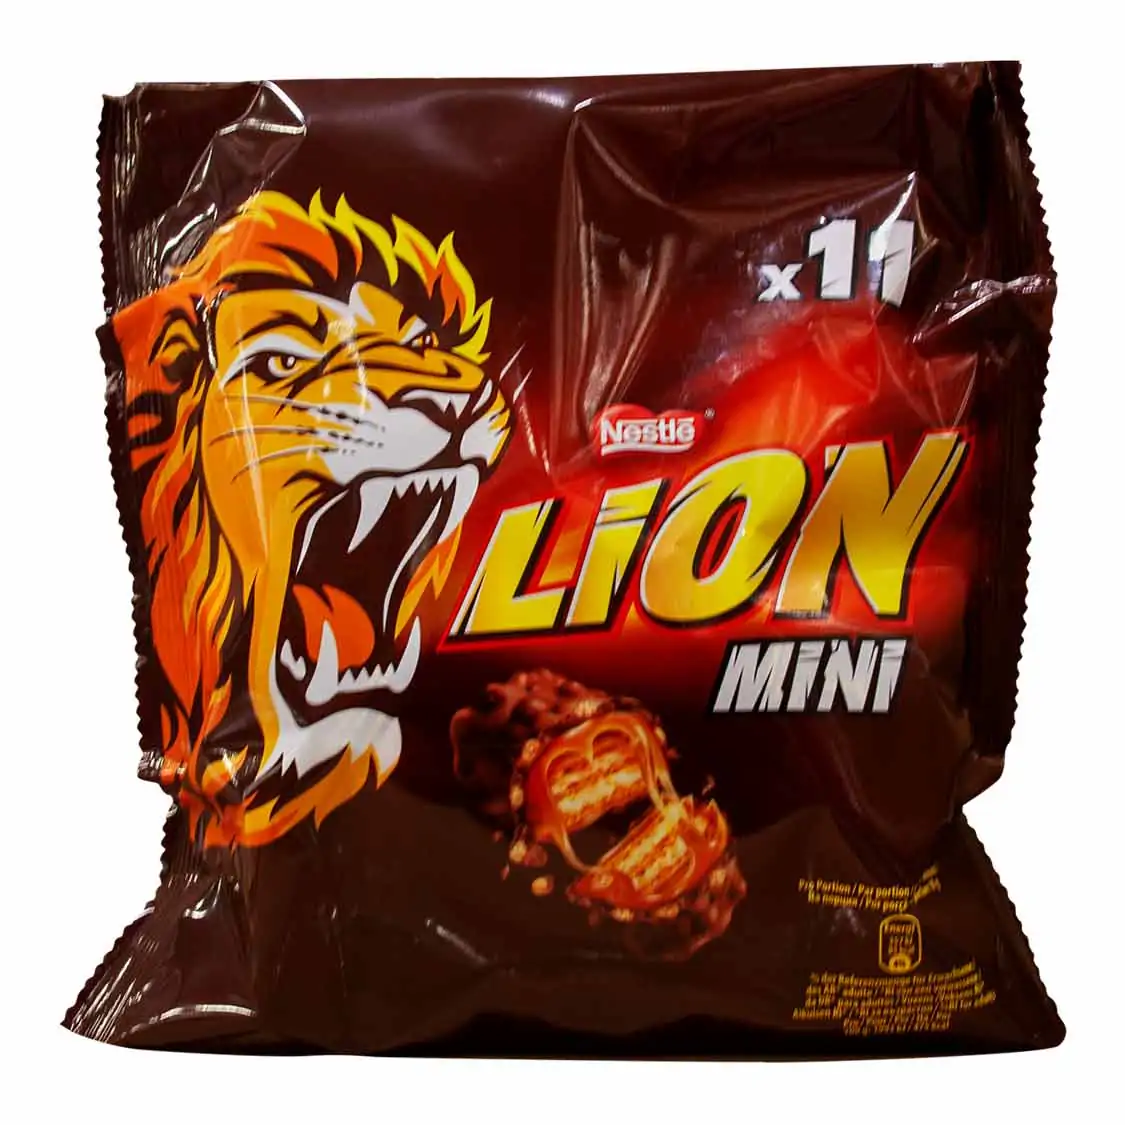 Lion mini 198g - Buy at Real Tobacco